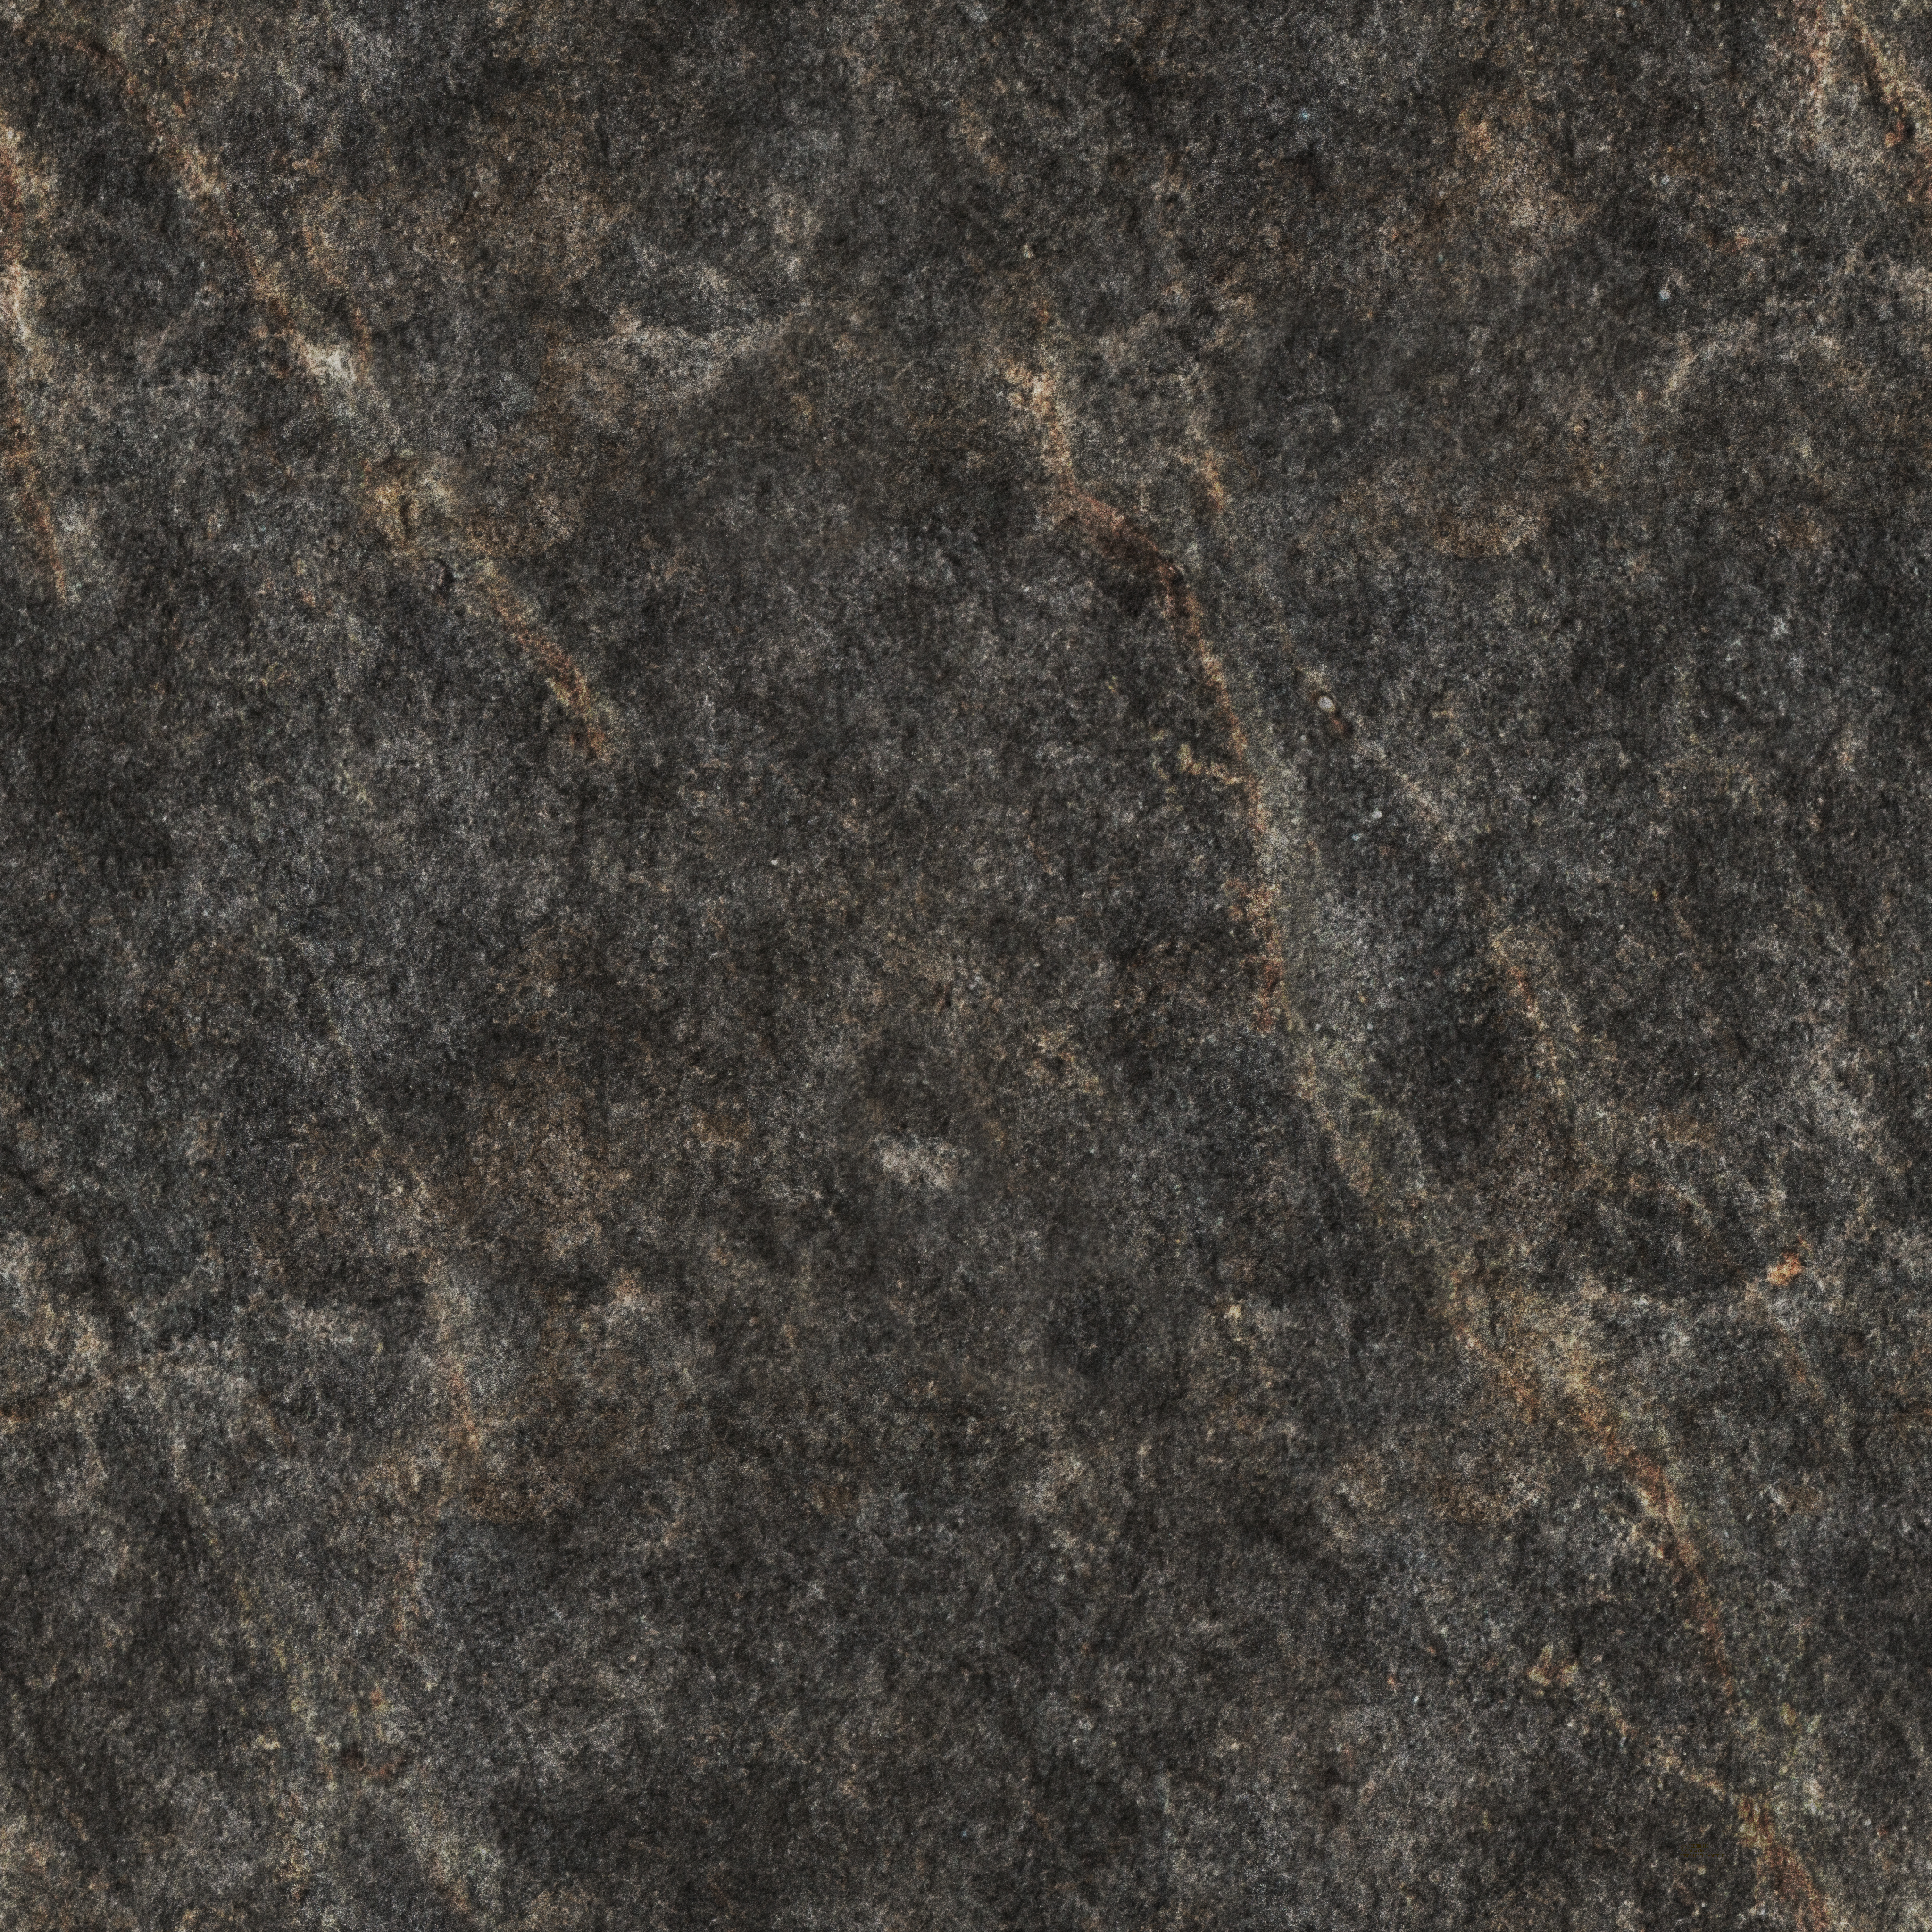 Stone Texture (4k) by ReconditeArcana on DeviantArt